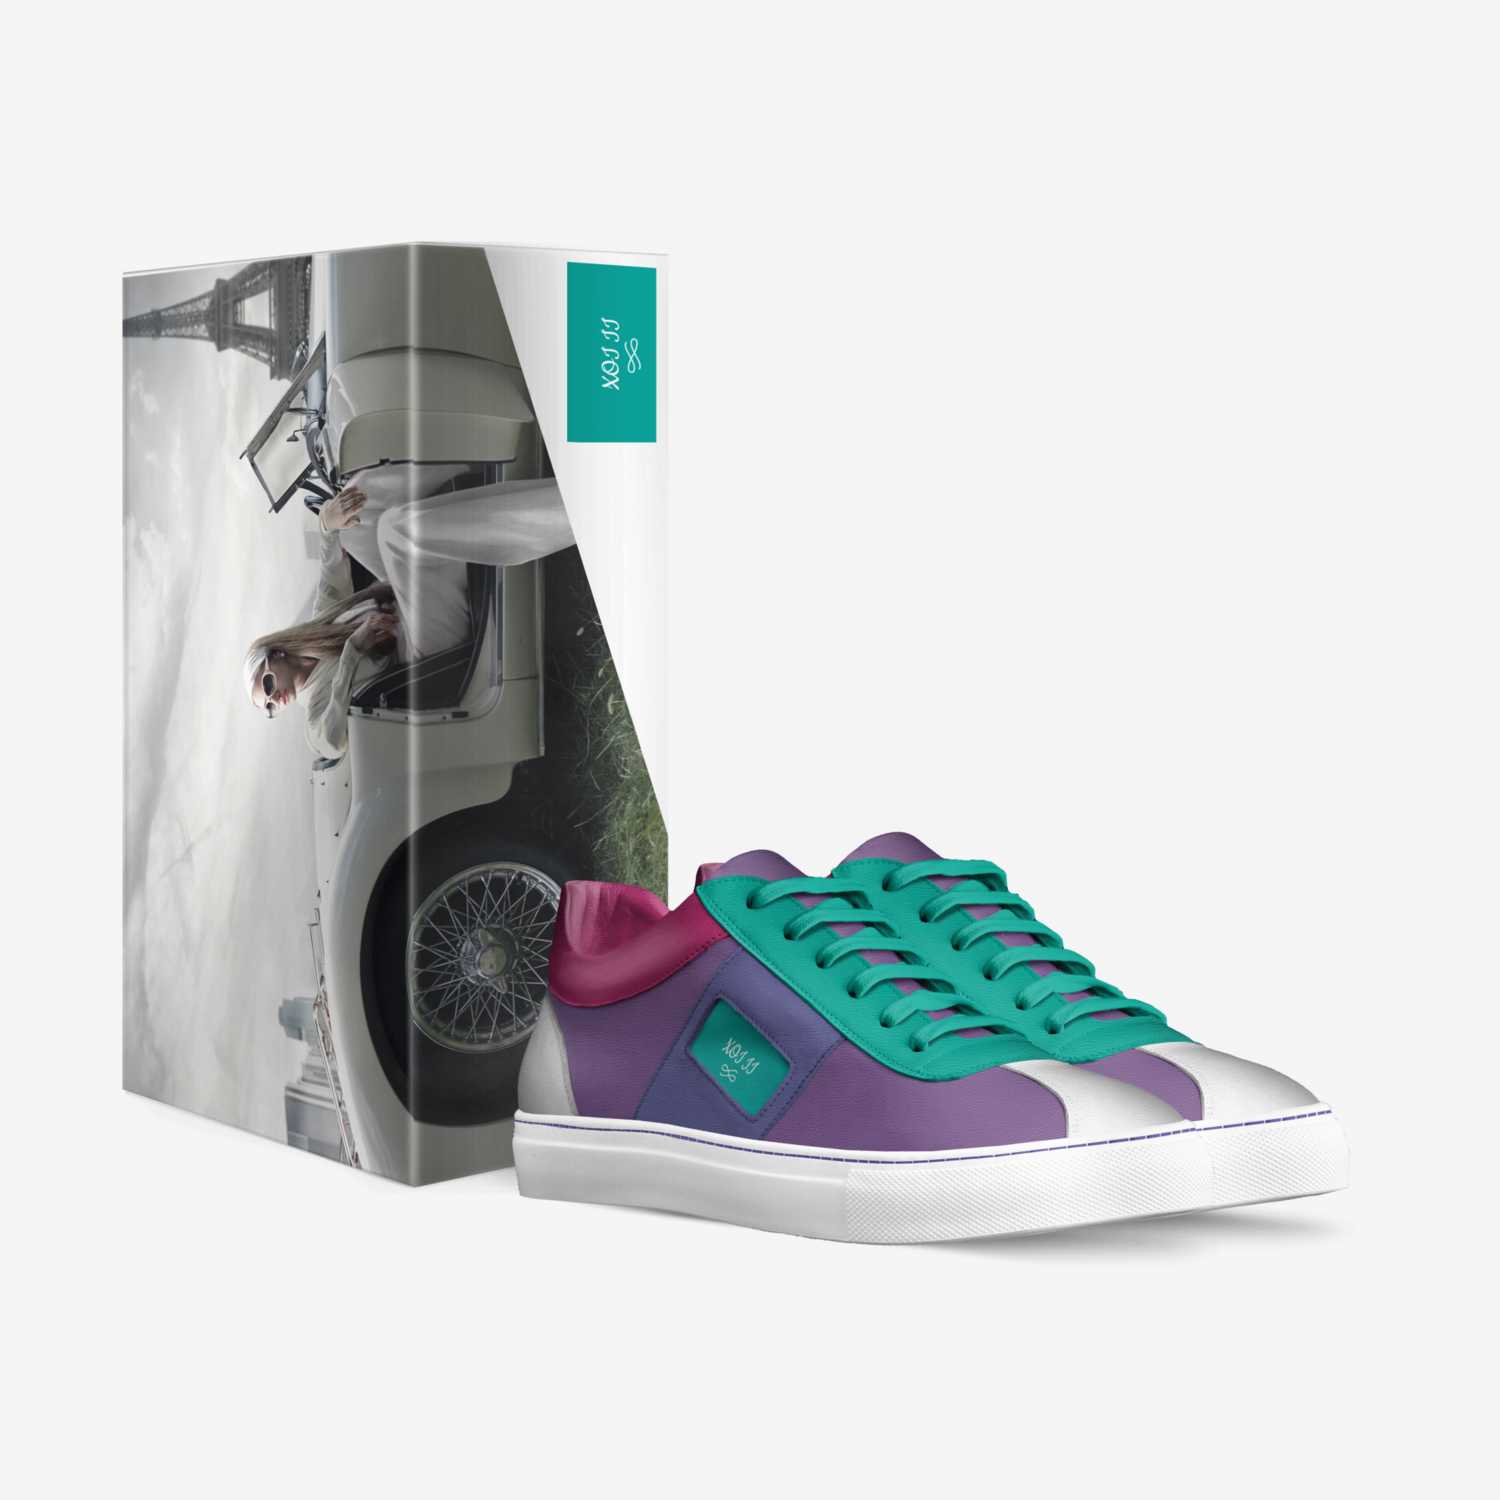 XOI II custom made in Italy shoes by Sharon Hammons | Box view